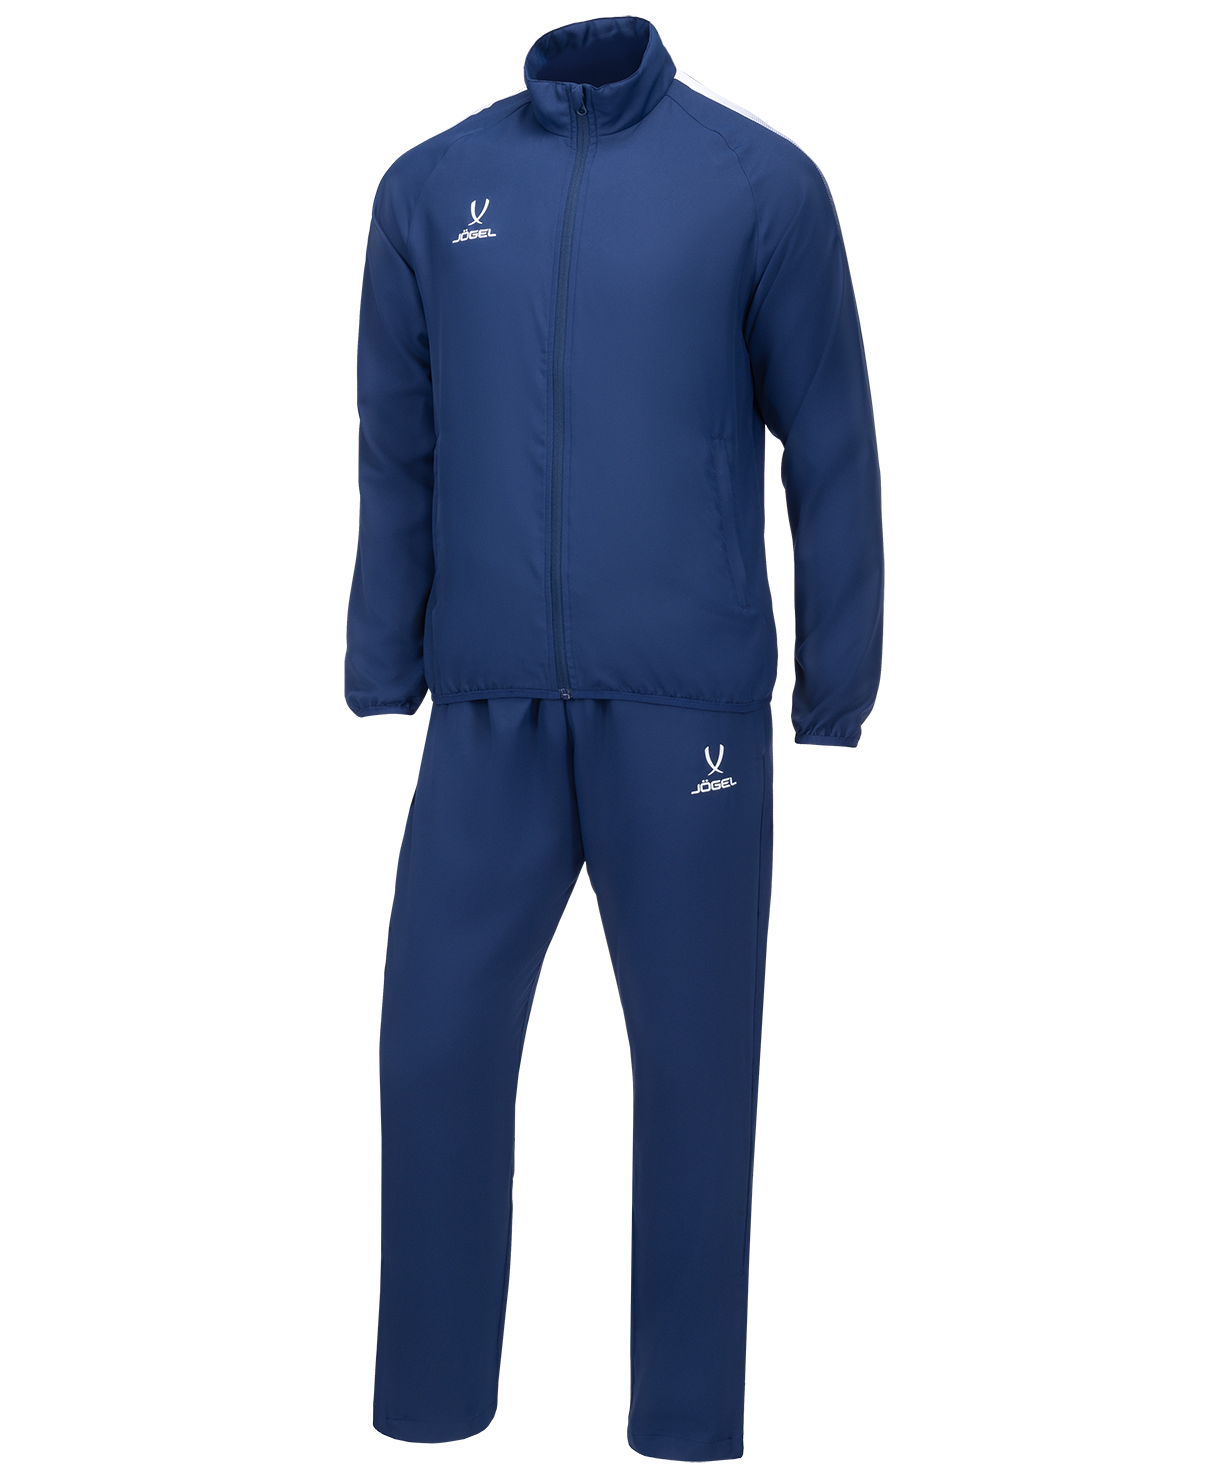 Костюм спортивный Jogel Camp Lined Suit, темно-синий/темно-синий, детский (YM) костюм спортивный jogel camp lined suit синий темно синий